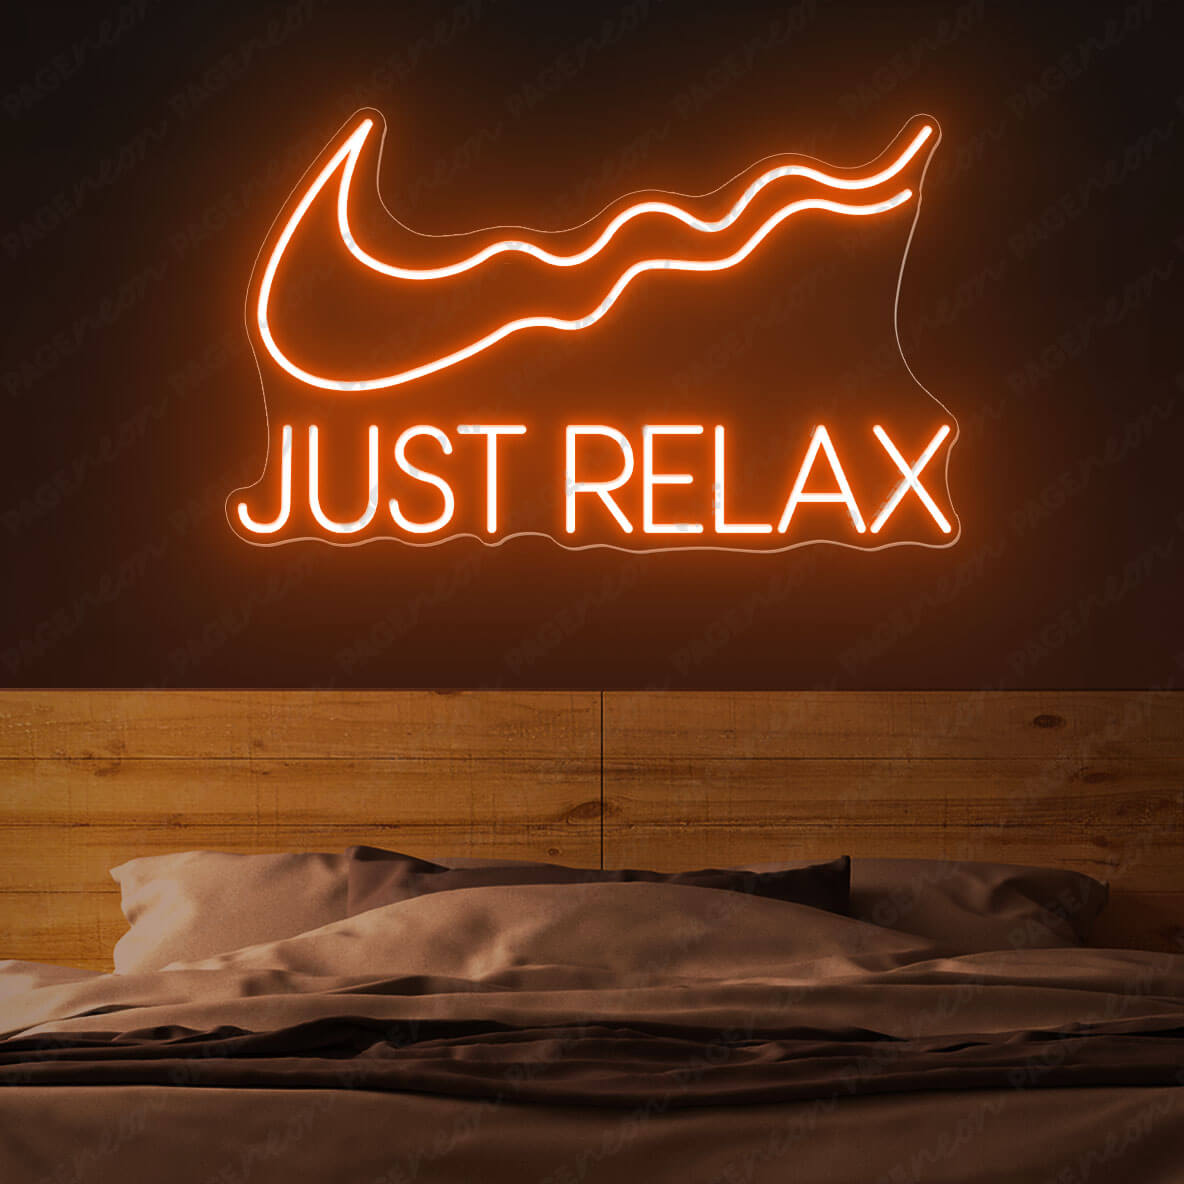 Just Relax Neon Sign Led Light Orange